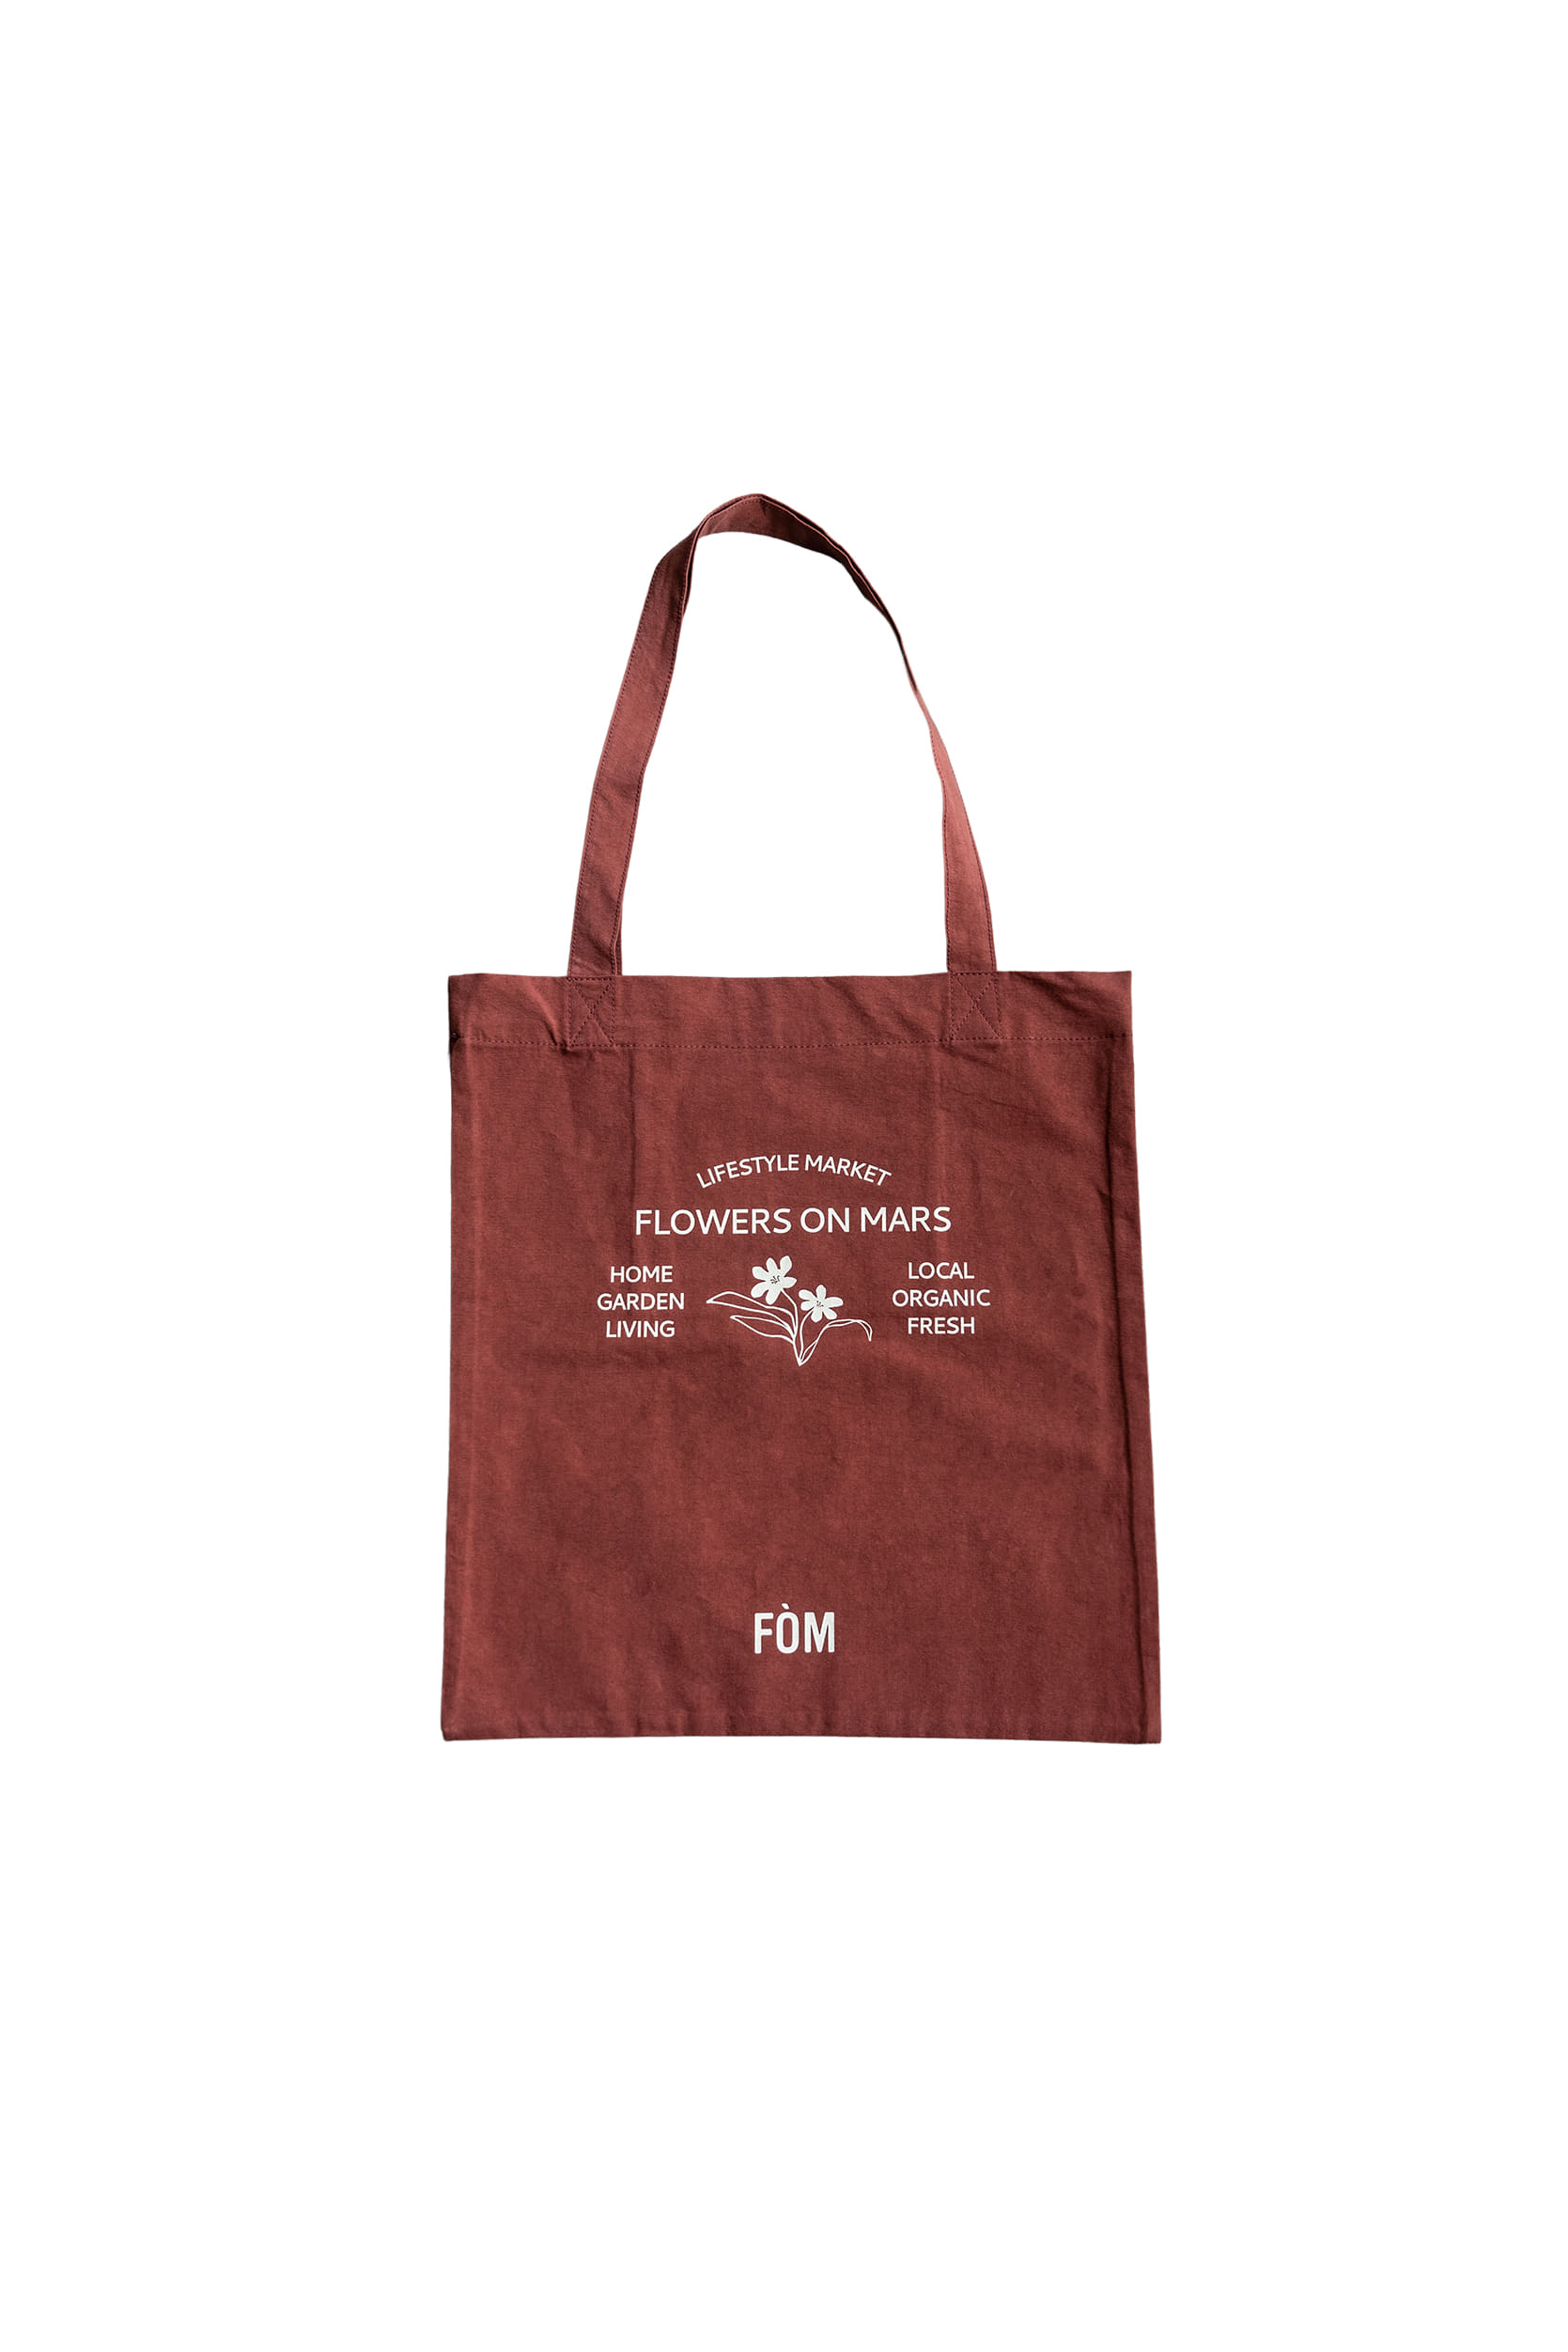 FÒM eco bag  [red brown]